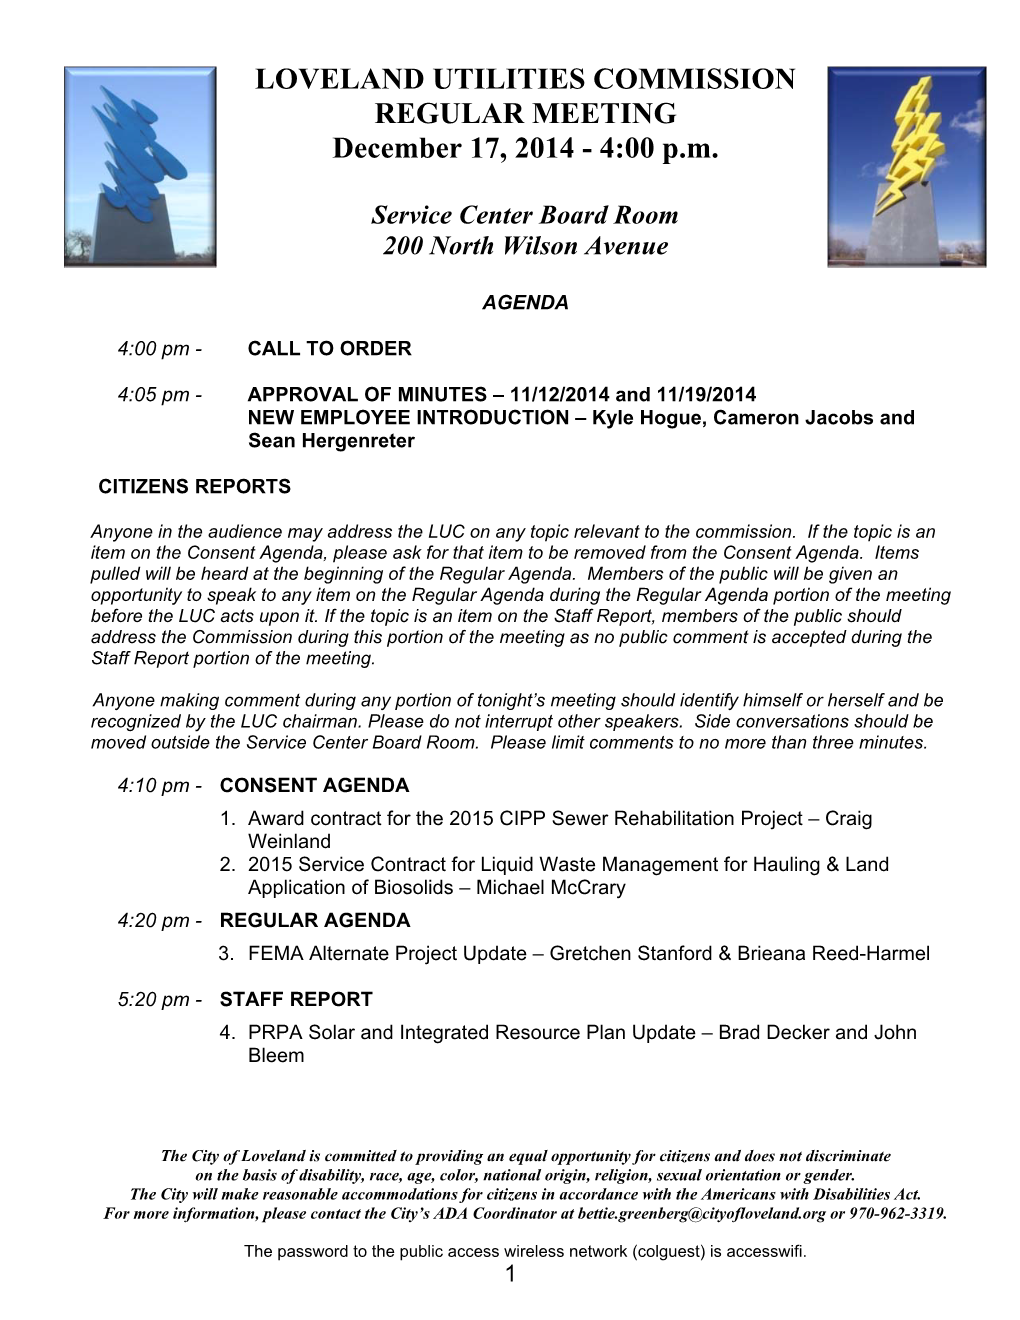 LOVELAND UTILITIES COMMISSION REGULAR MEETING December 17, 2014 - 4:00 P.M